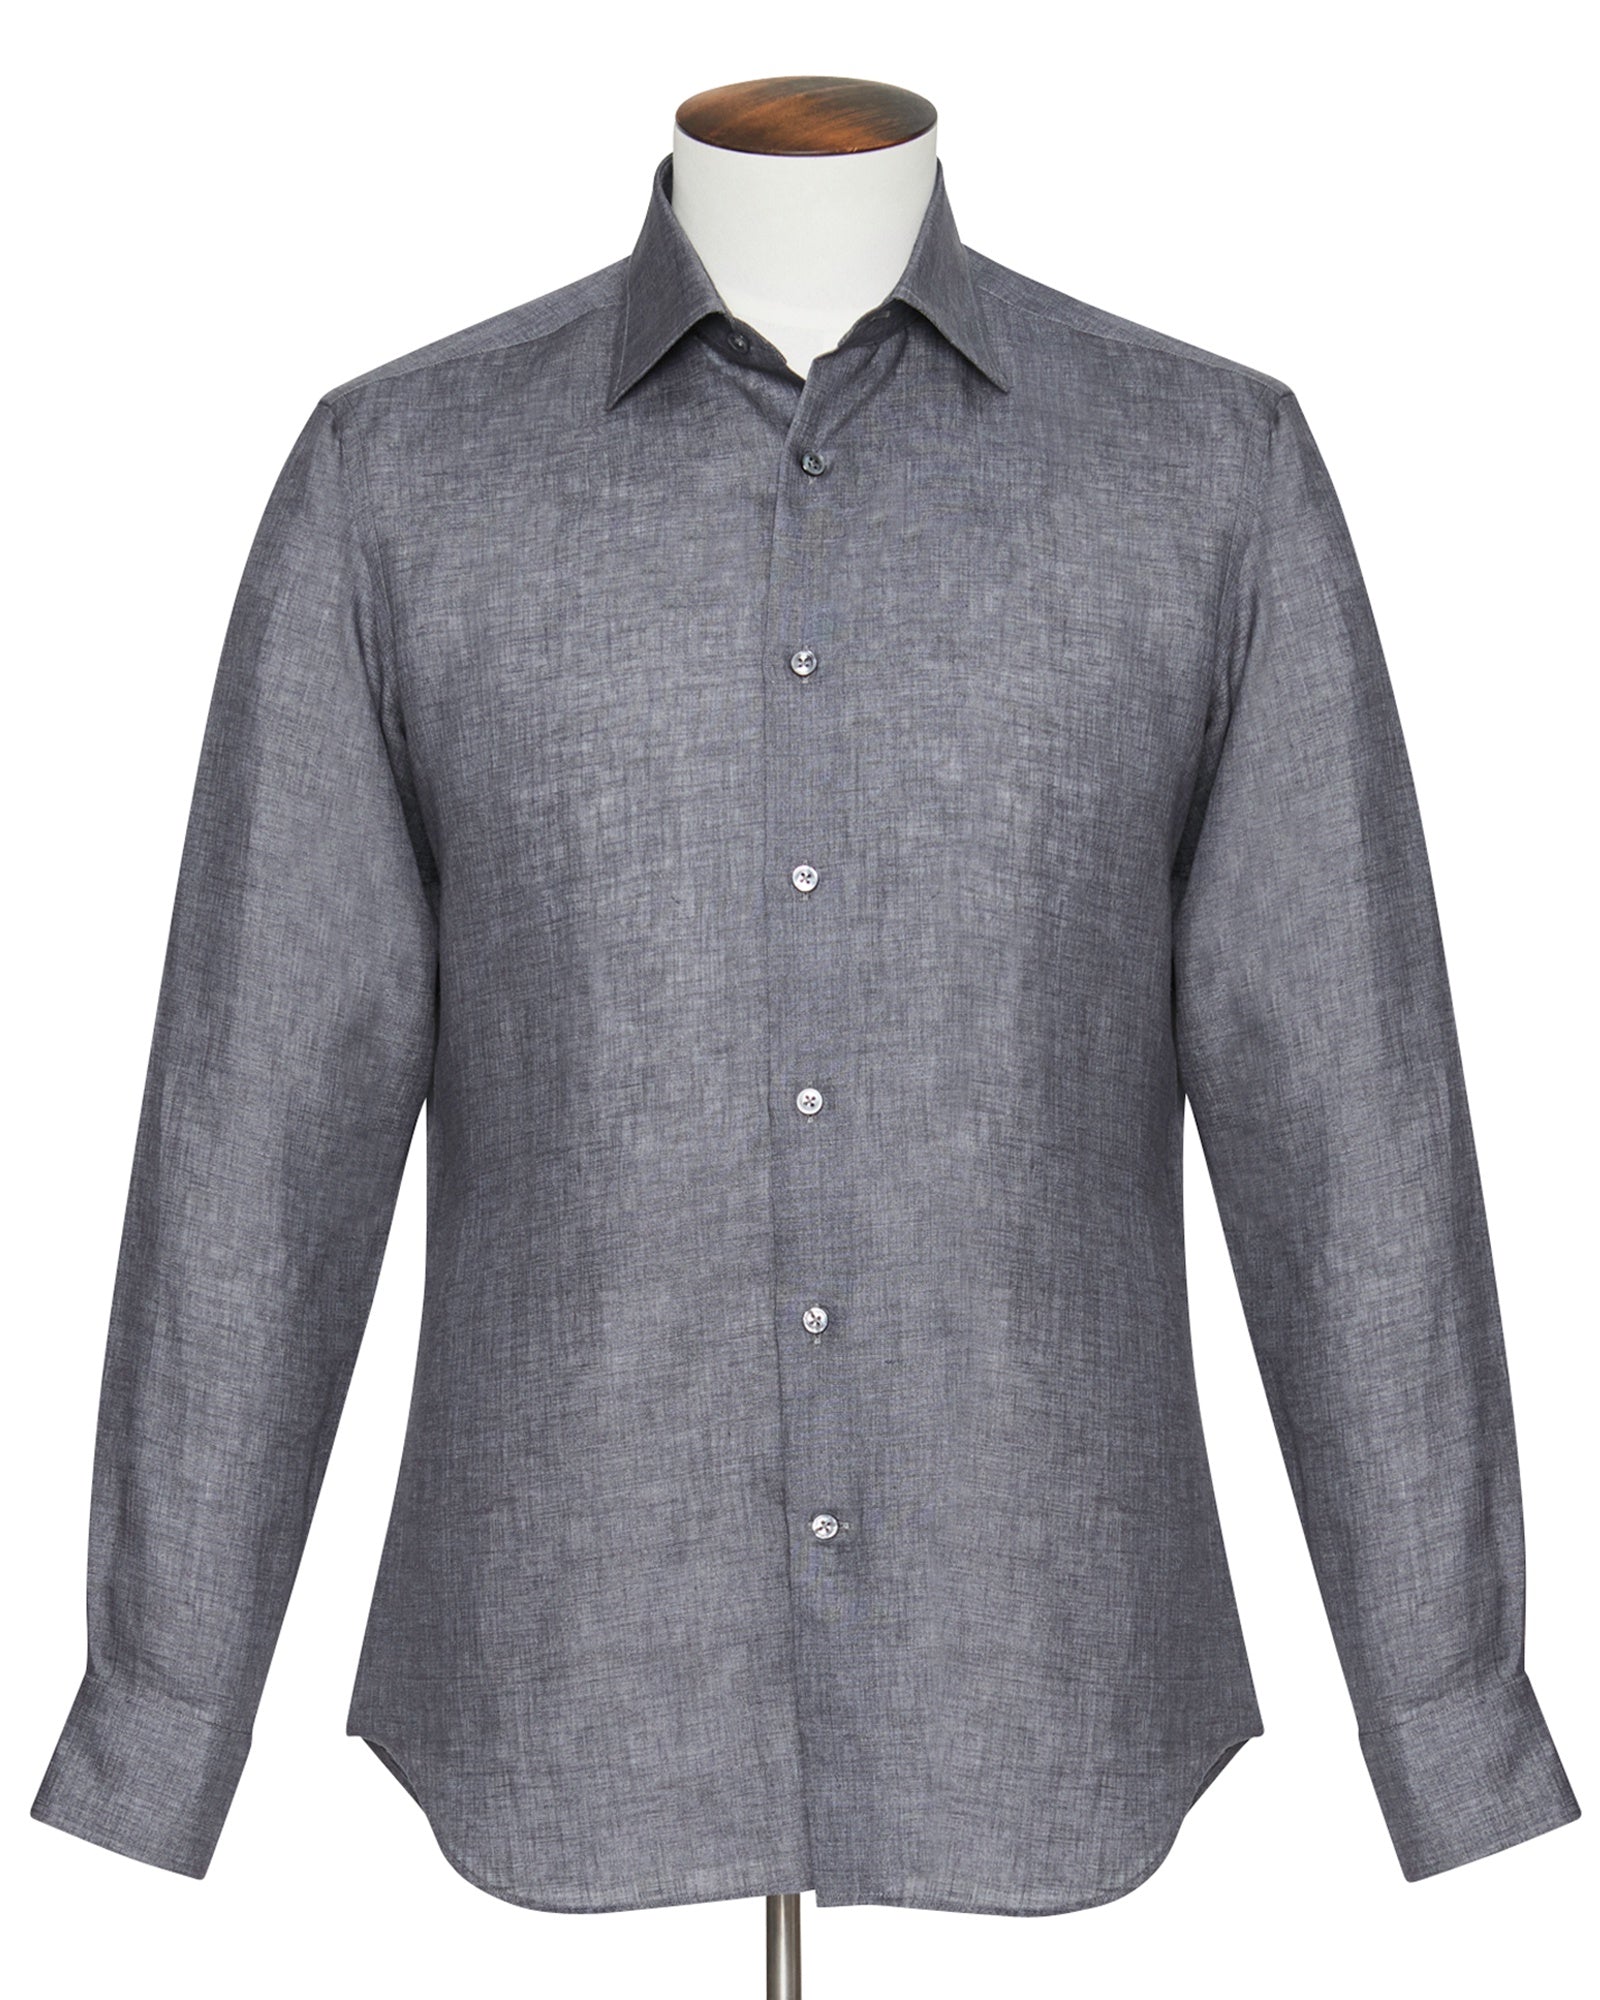 Slate Grey Linen Spread Collar Shirt